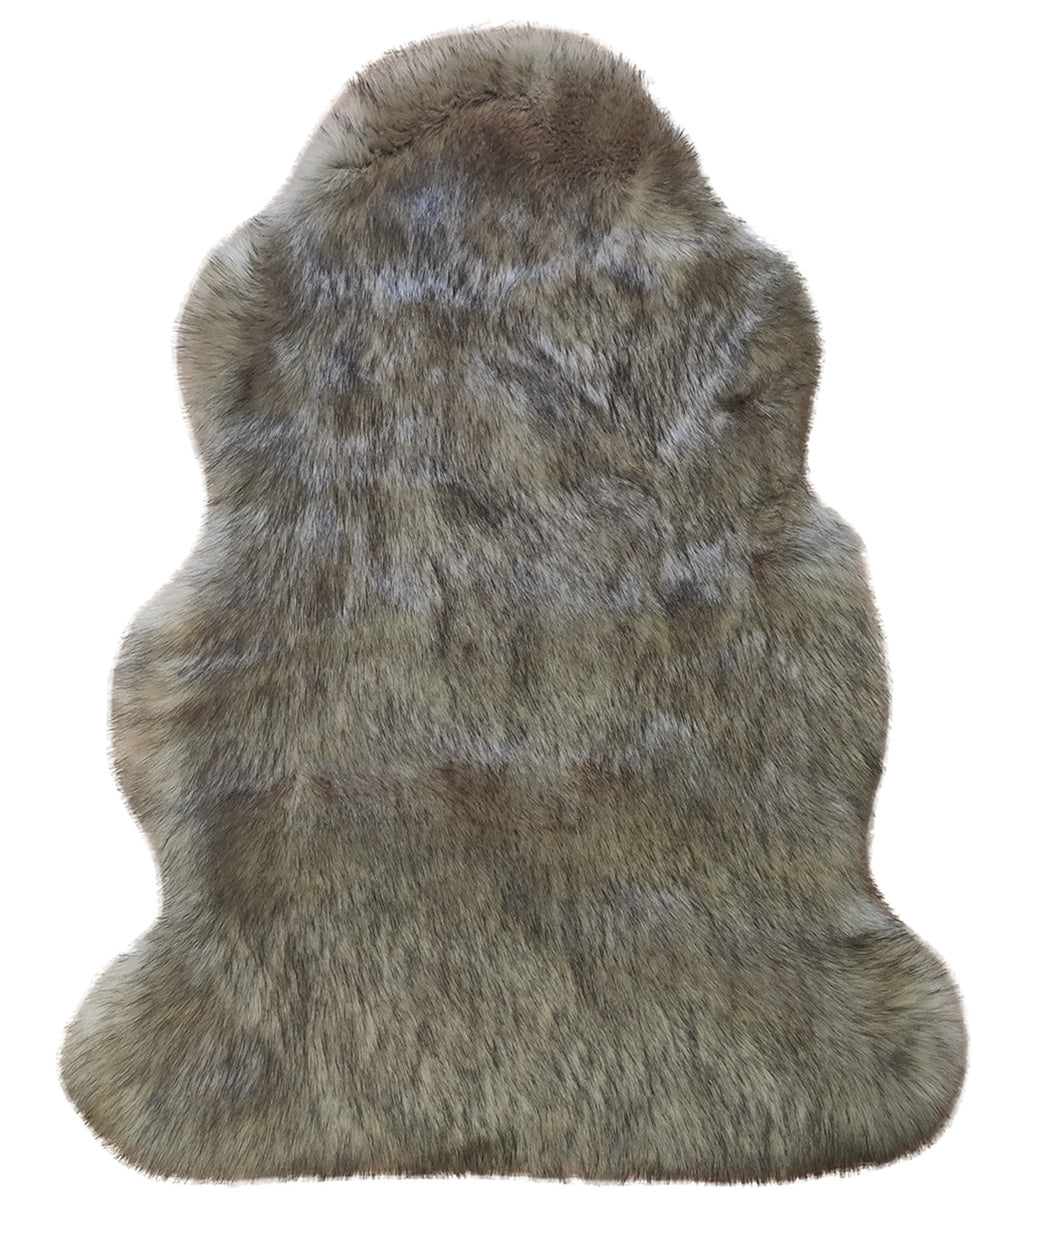 Extra Thick Soft Acrylic Luxury Faux Fur Sheepskin Rug 90cm x 90cm (2 Colours)